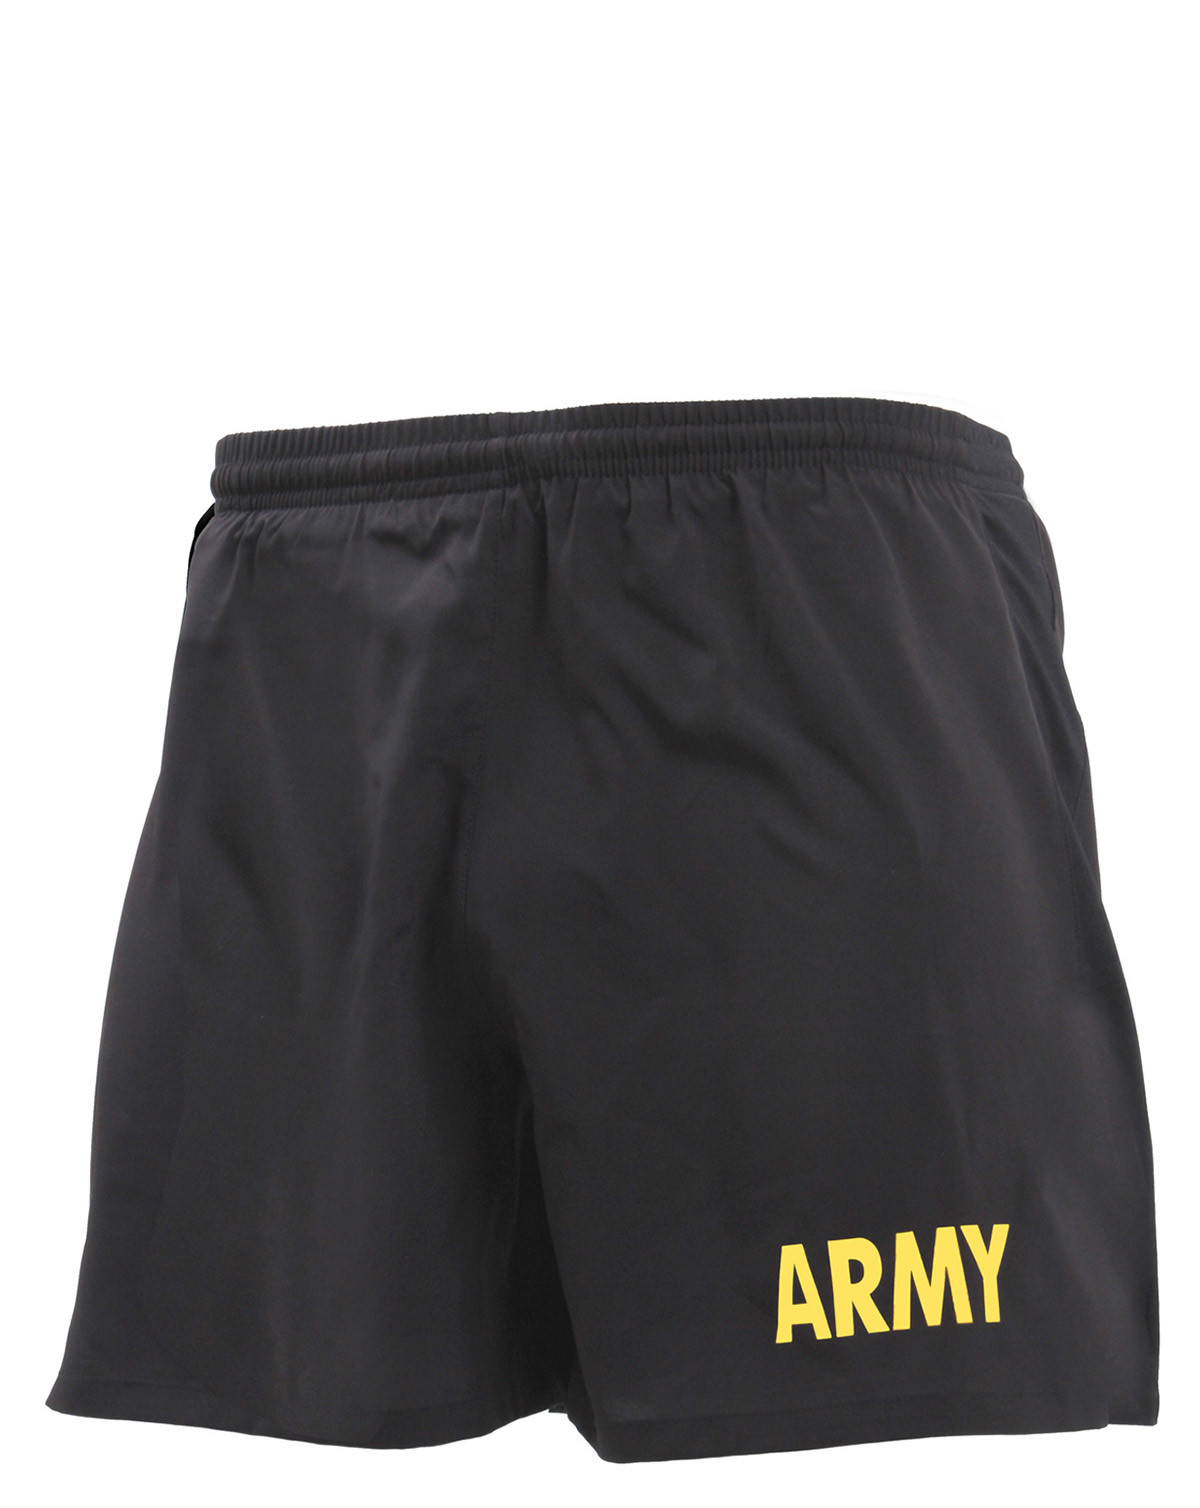 Rothco Army PT Trænings Shorts (Sort, L)